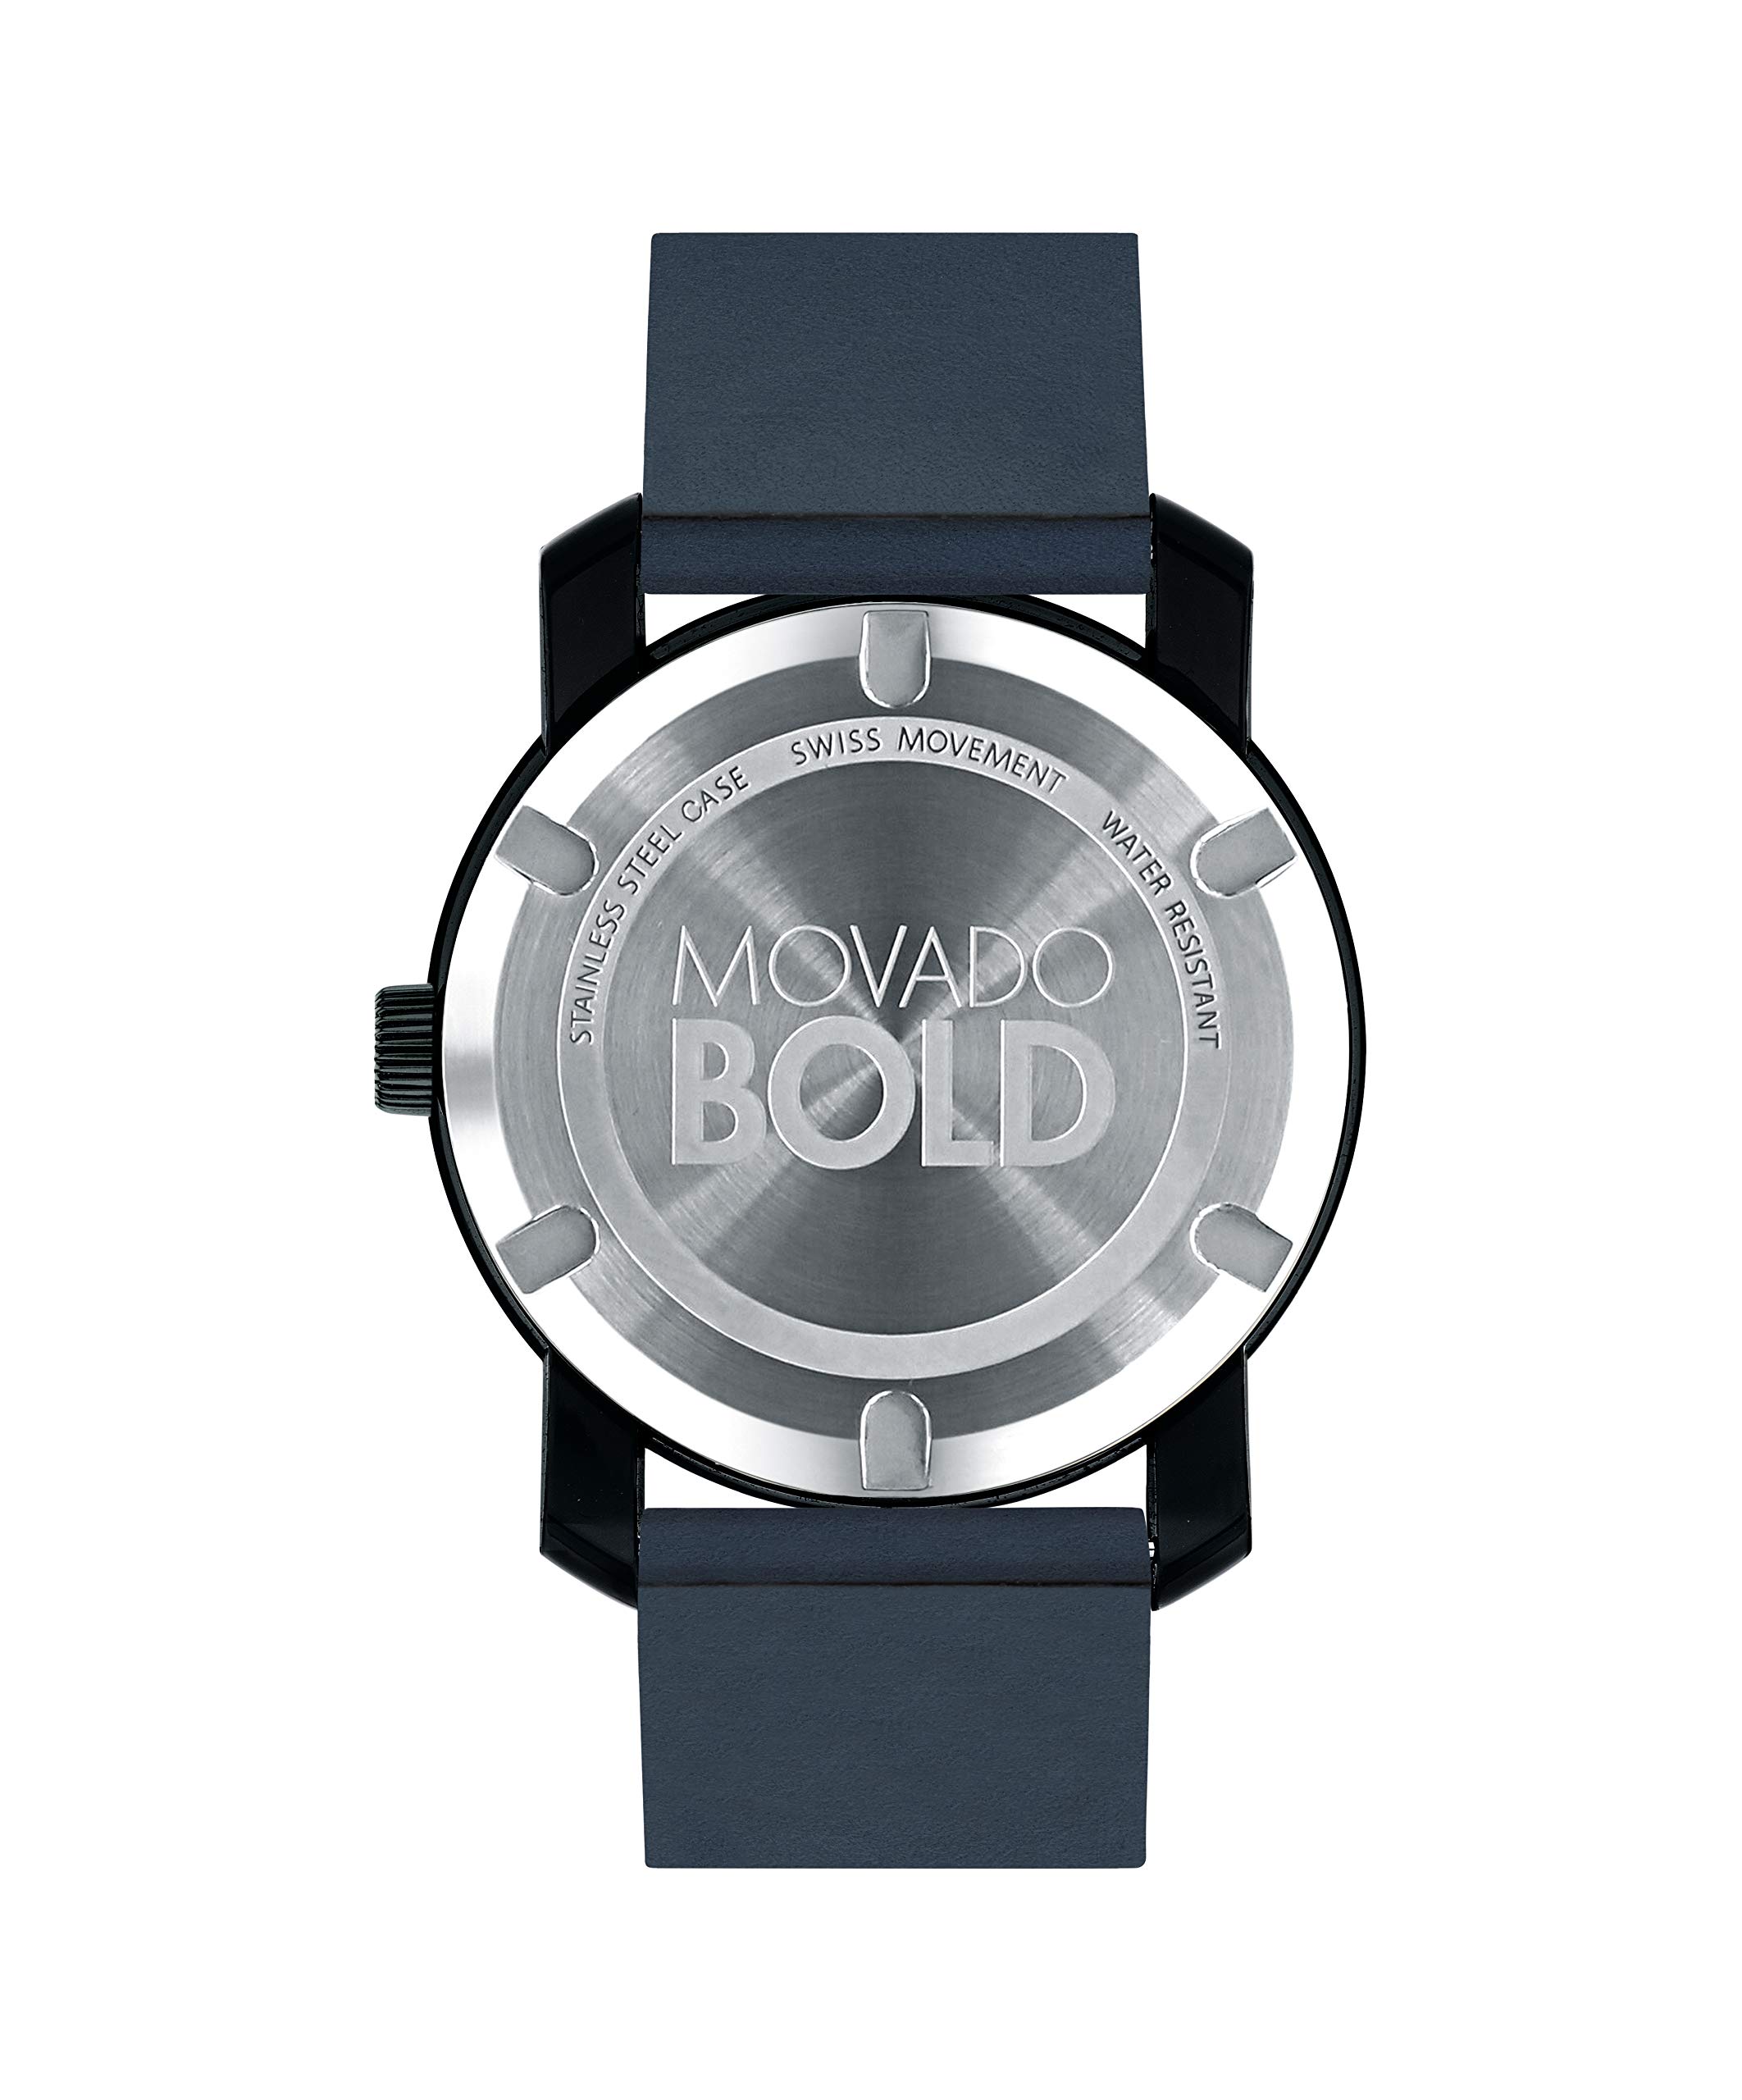 Movado Bold, Tr90 Stainless Steel Case, Blue Dial, Dark Navy Leather Strap, Black, Men, 3600601